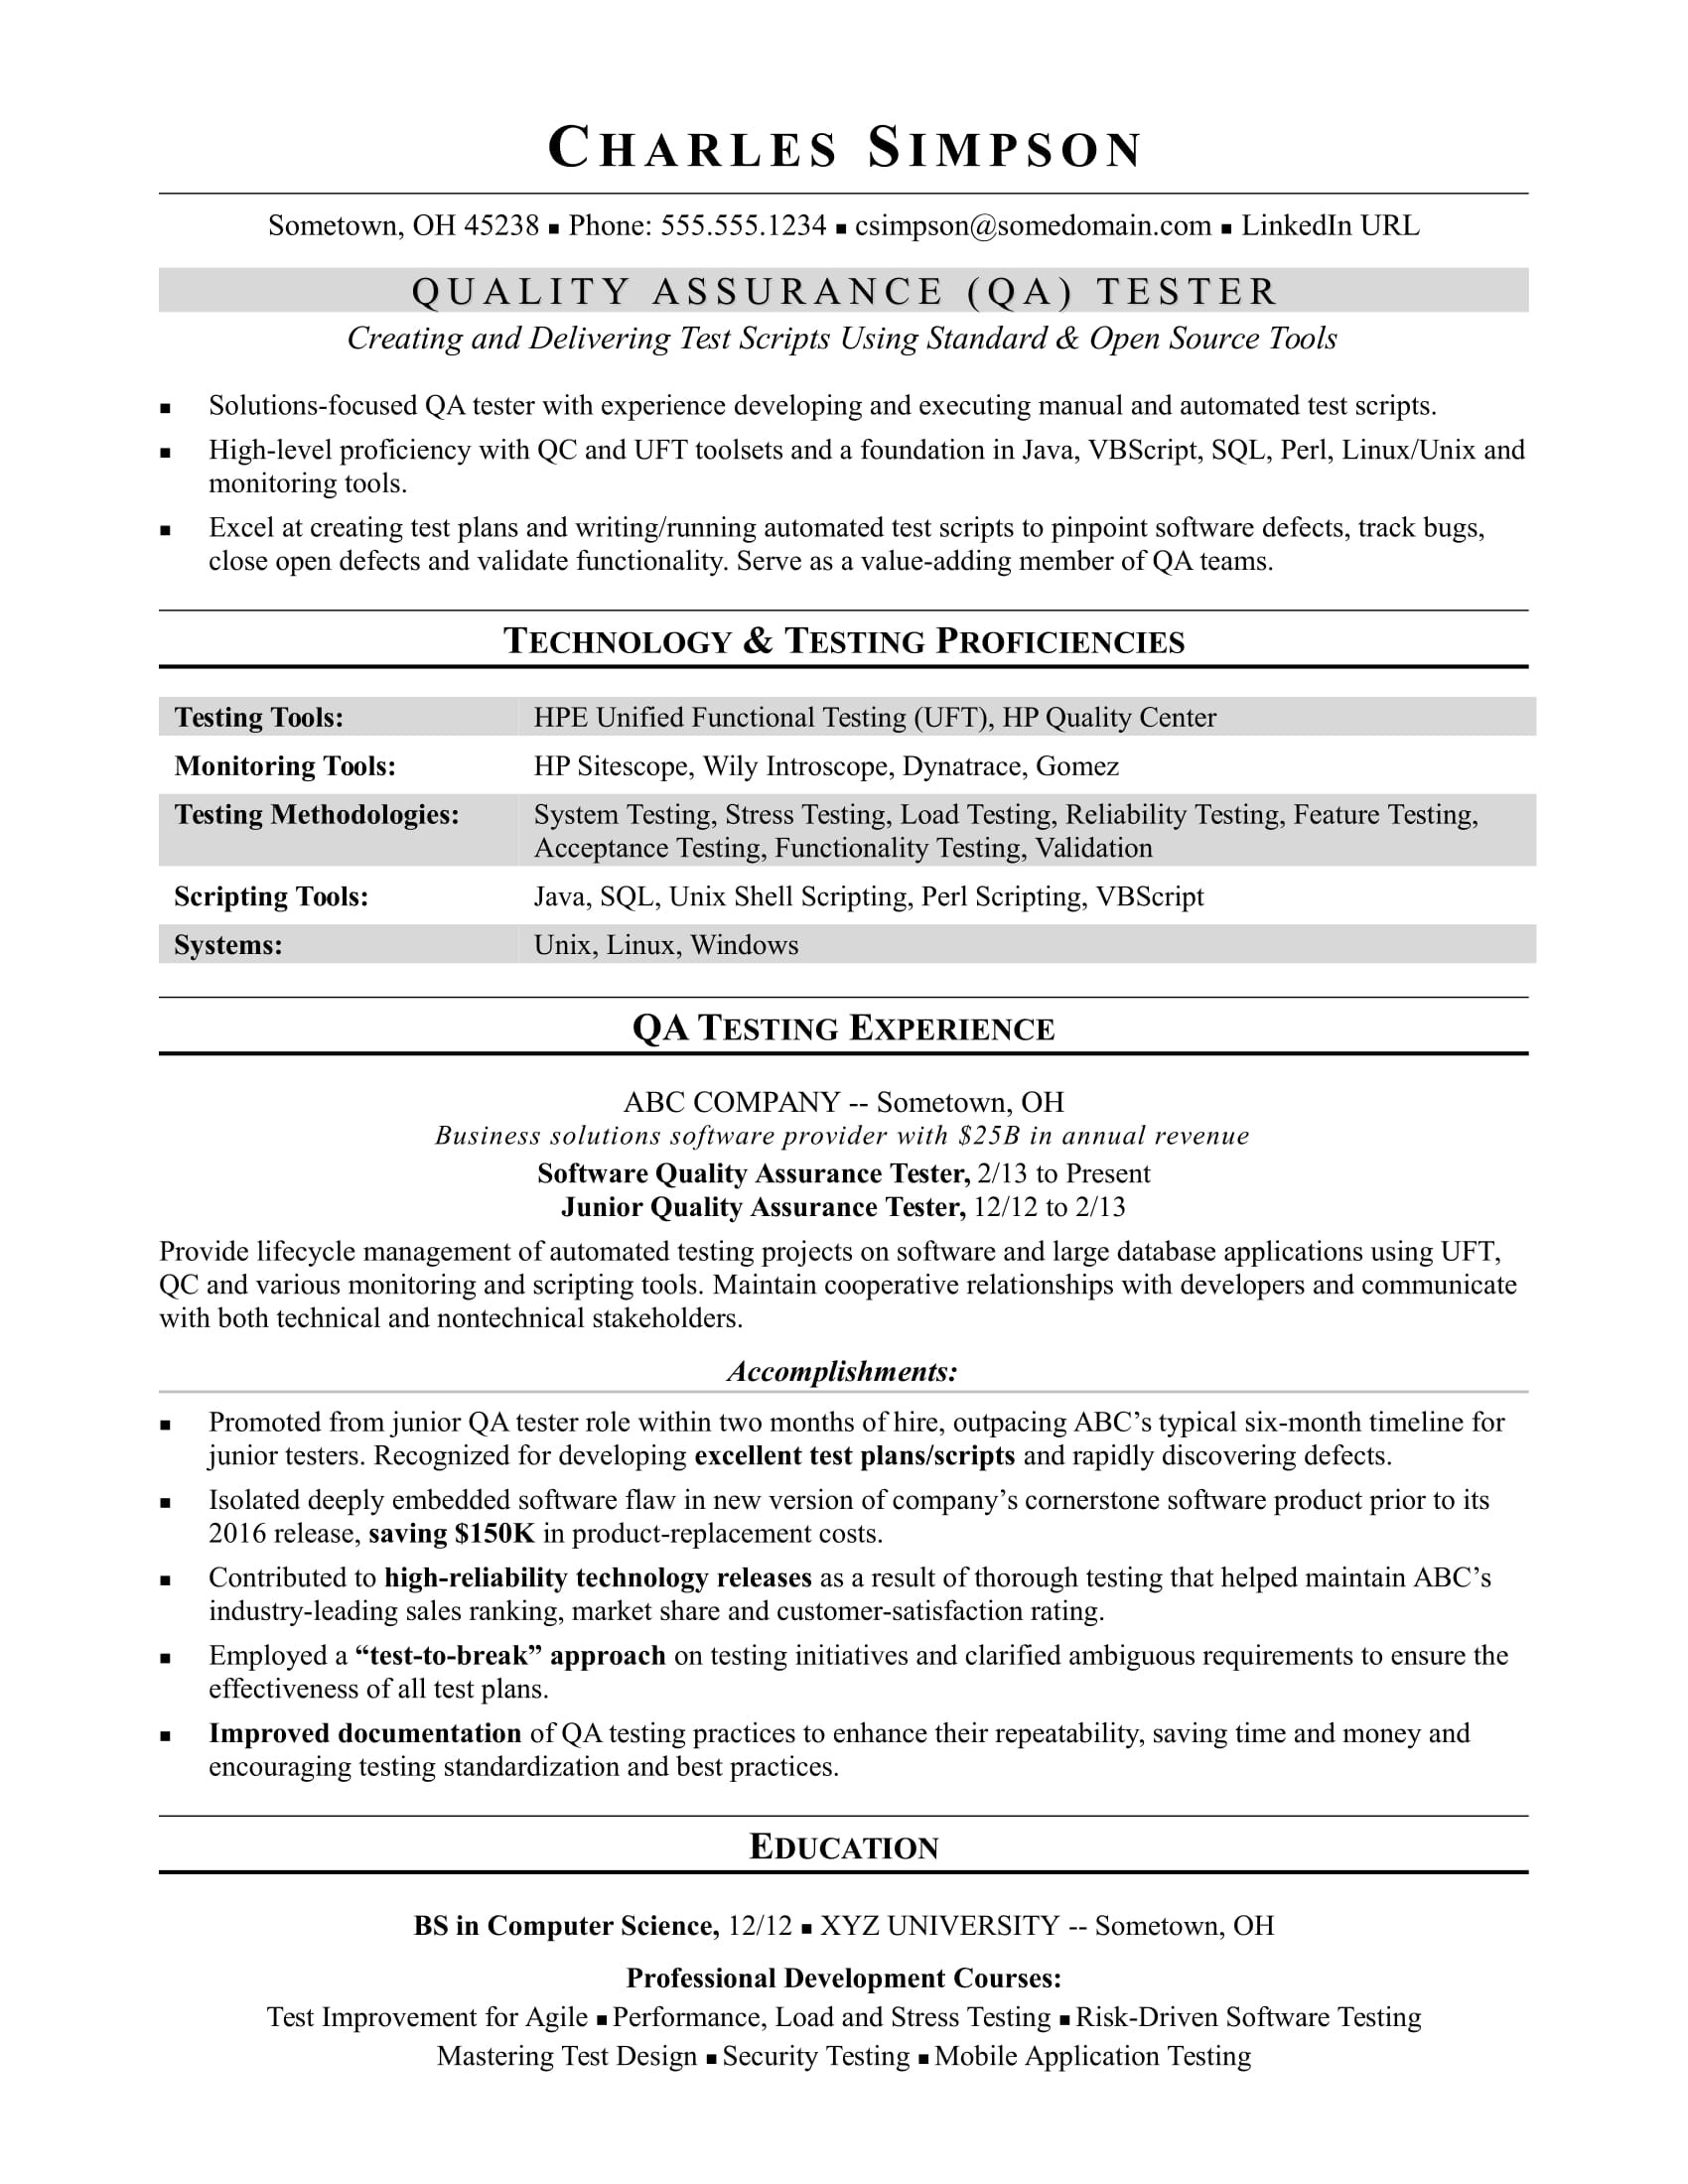 Sample Resume for Entry Quality assurance Sample Resume for A Midlevel Qa software Tester Monster.com